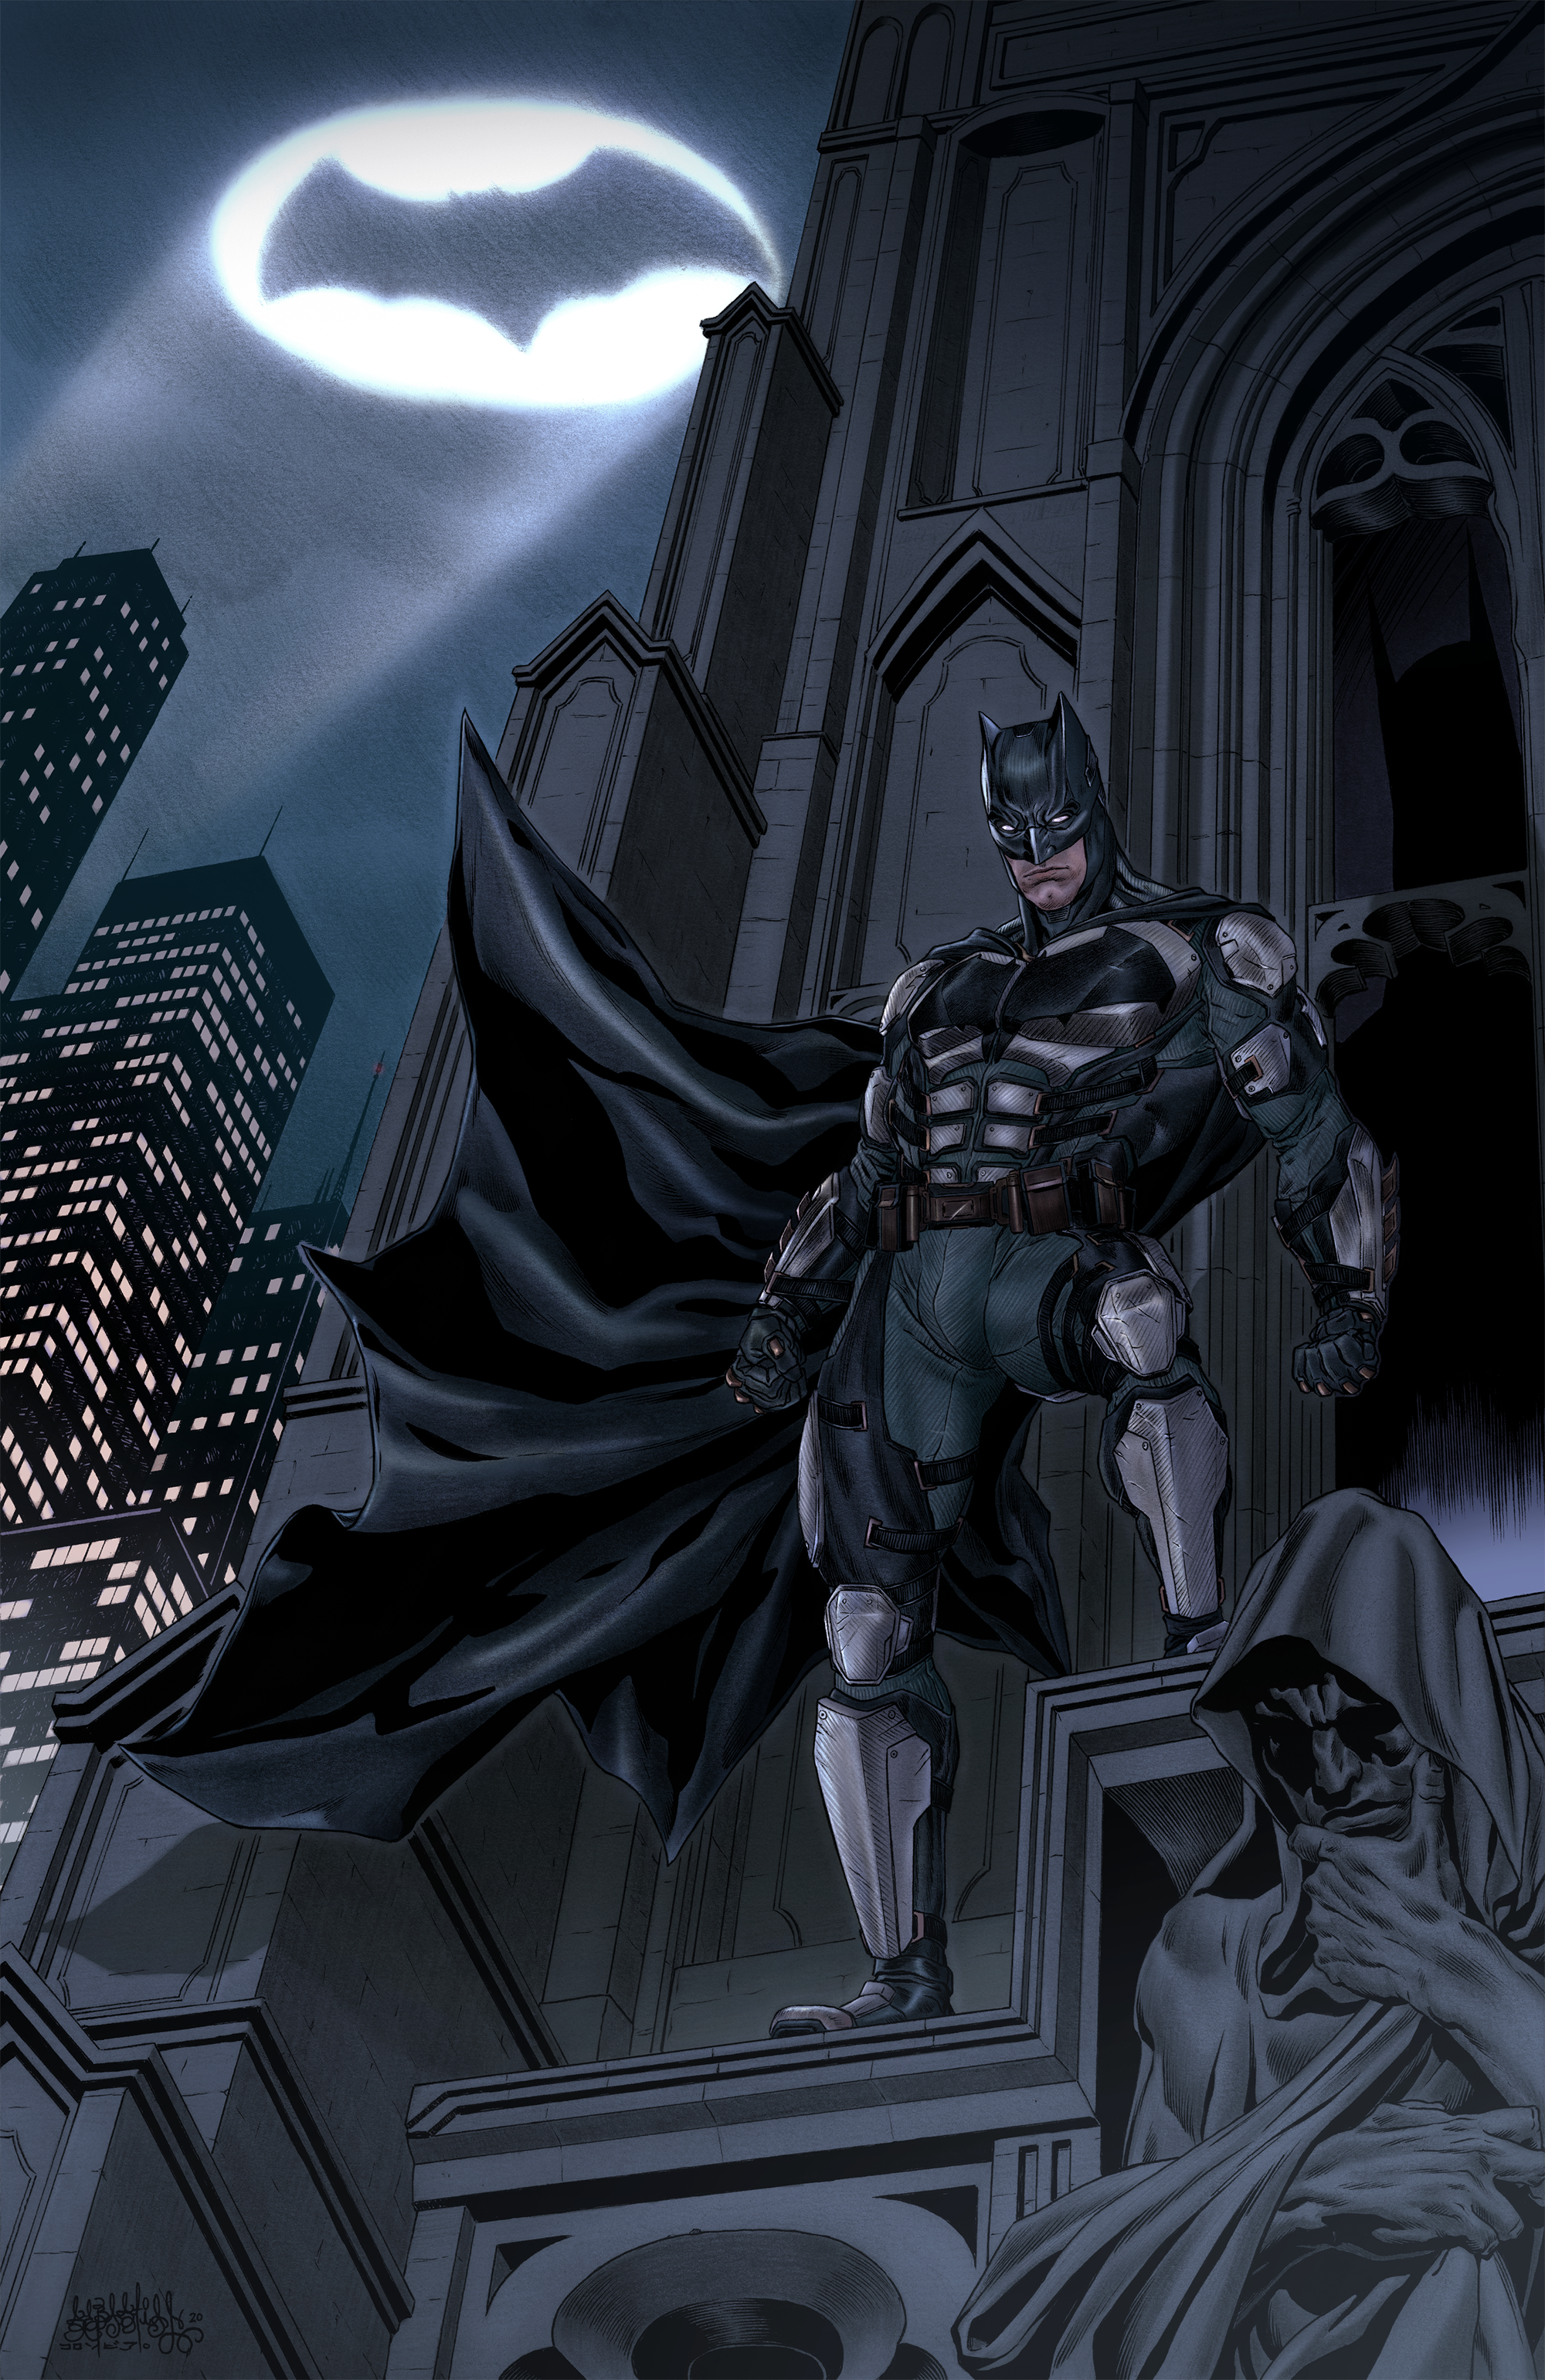 Justice League 2017 Ben Affleck Batman Returns The Dark Knight Artwork Gotham Gotham City Gargoyles 2000x3081